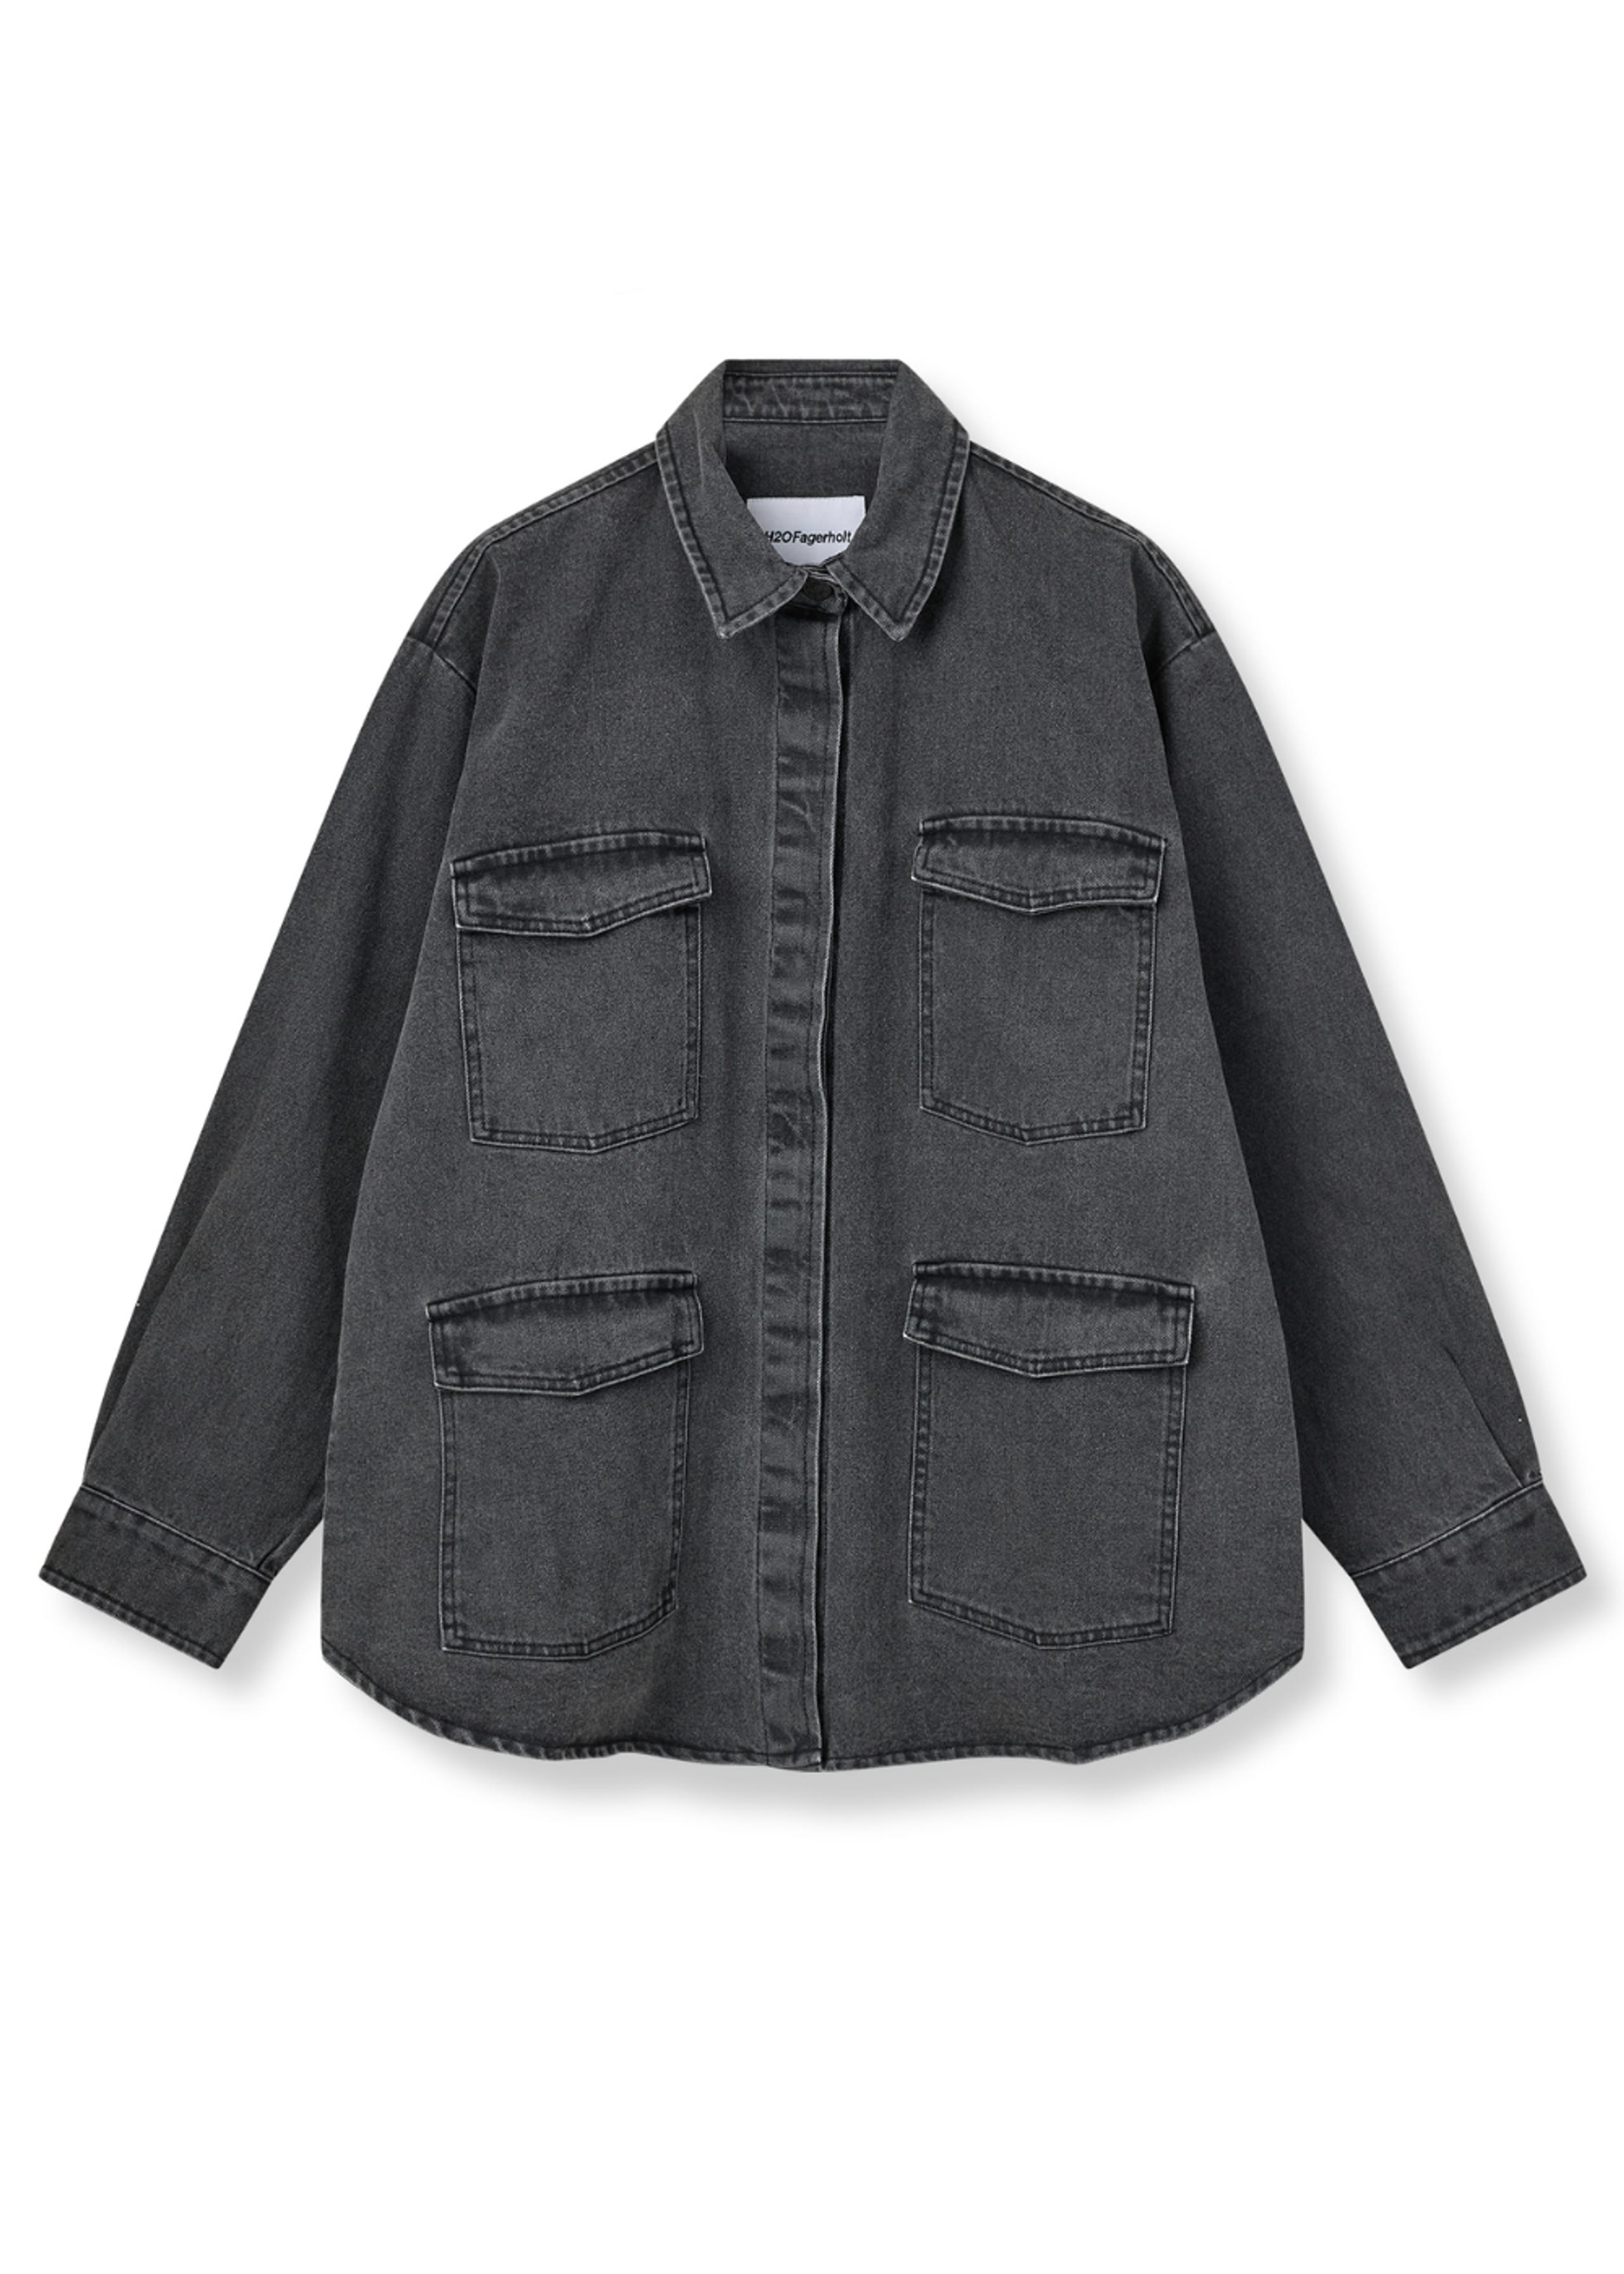 H2OFagerholt - Hemd - Classic Jeans Shirt - Washed Black